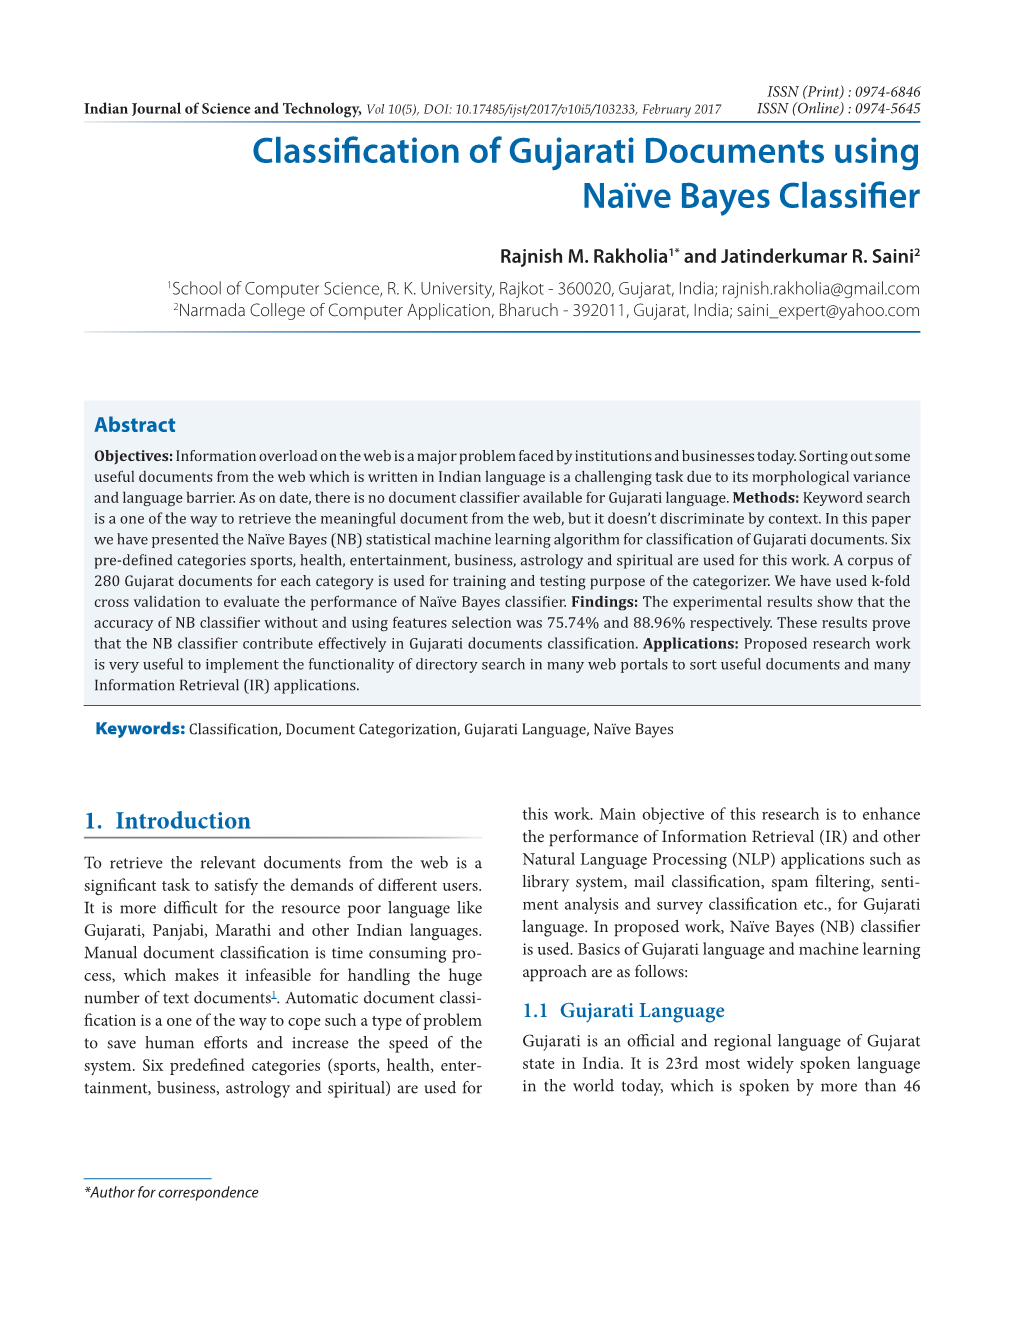 Classification of Gujarati Documents Using Naïve Bayes Classifier